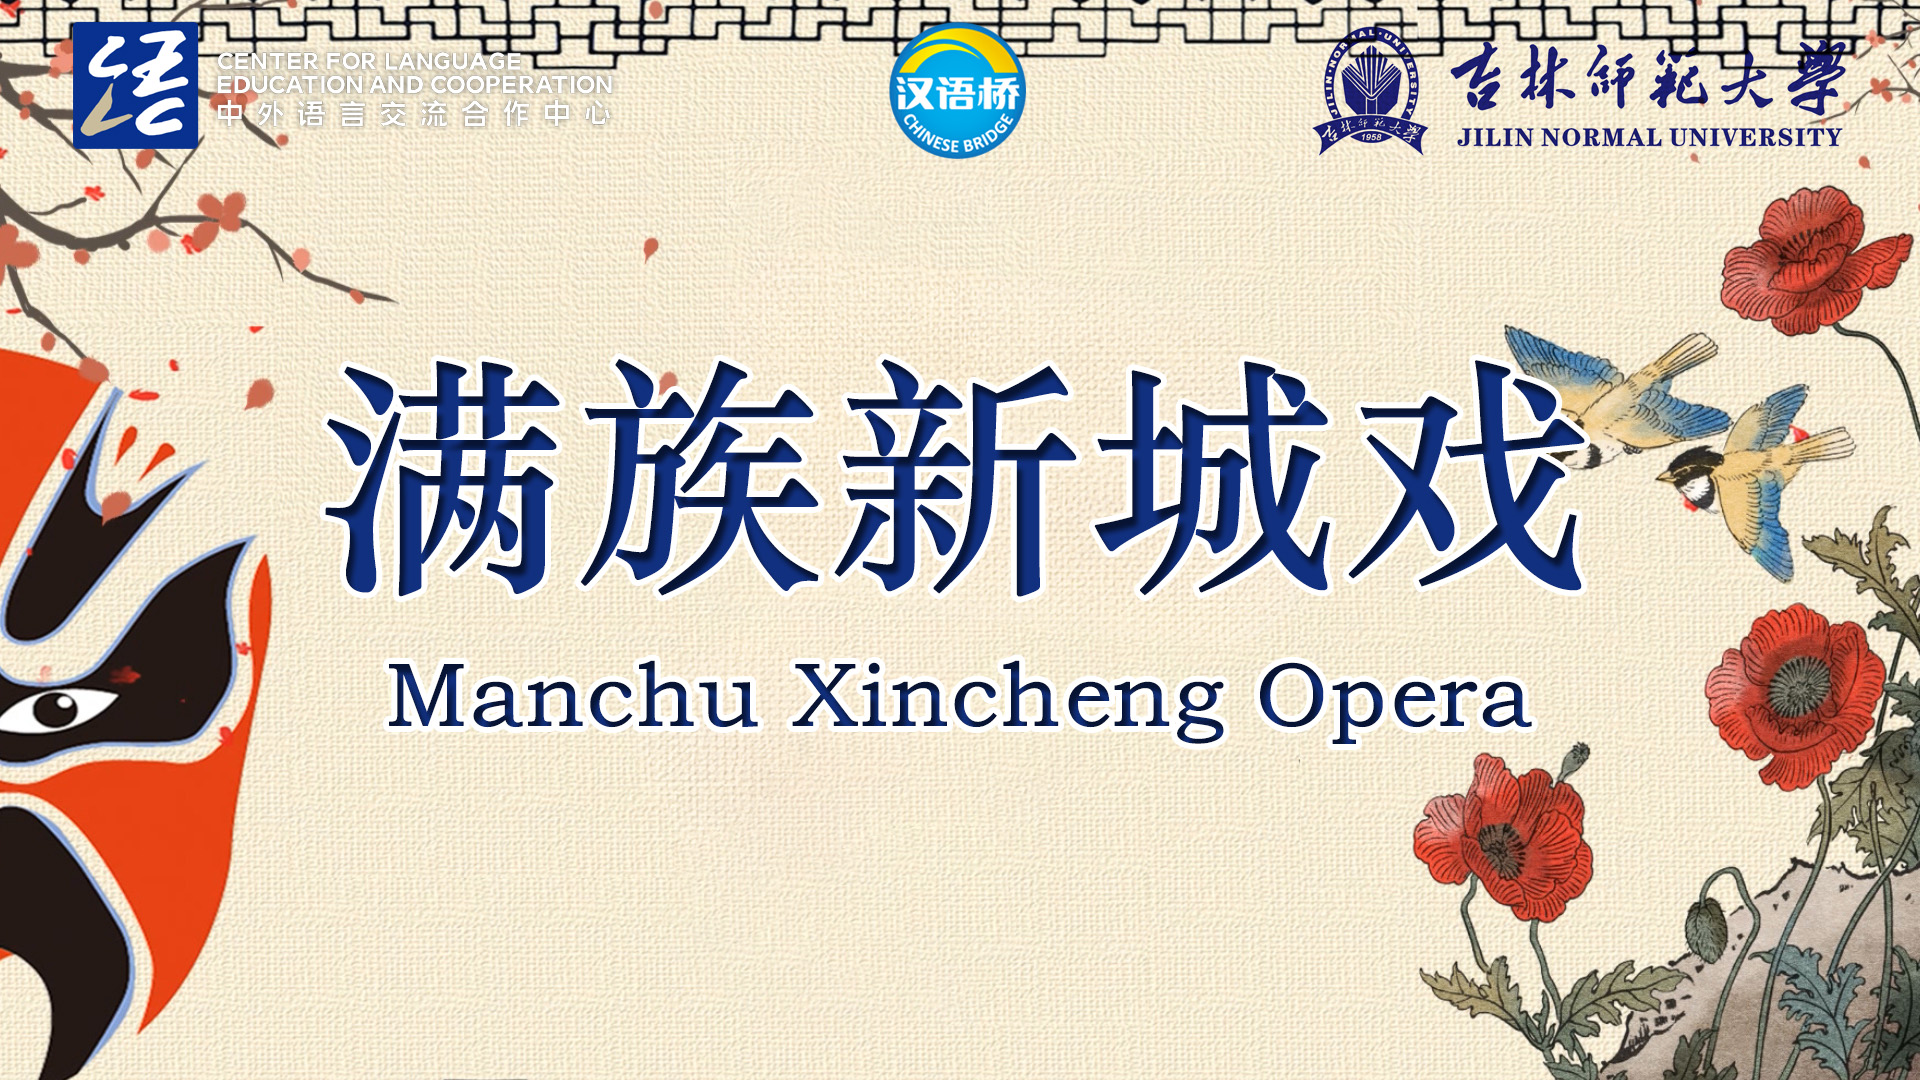 Manchu Xincheng Opera